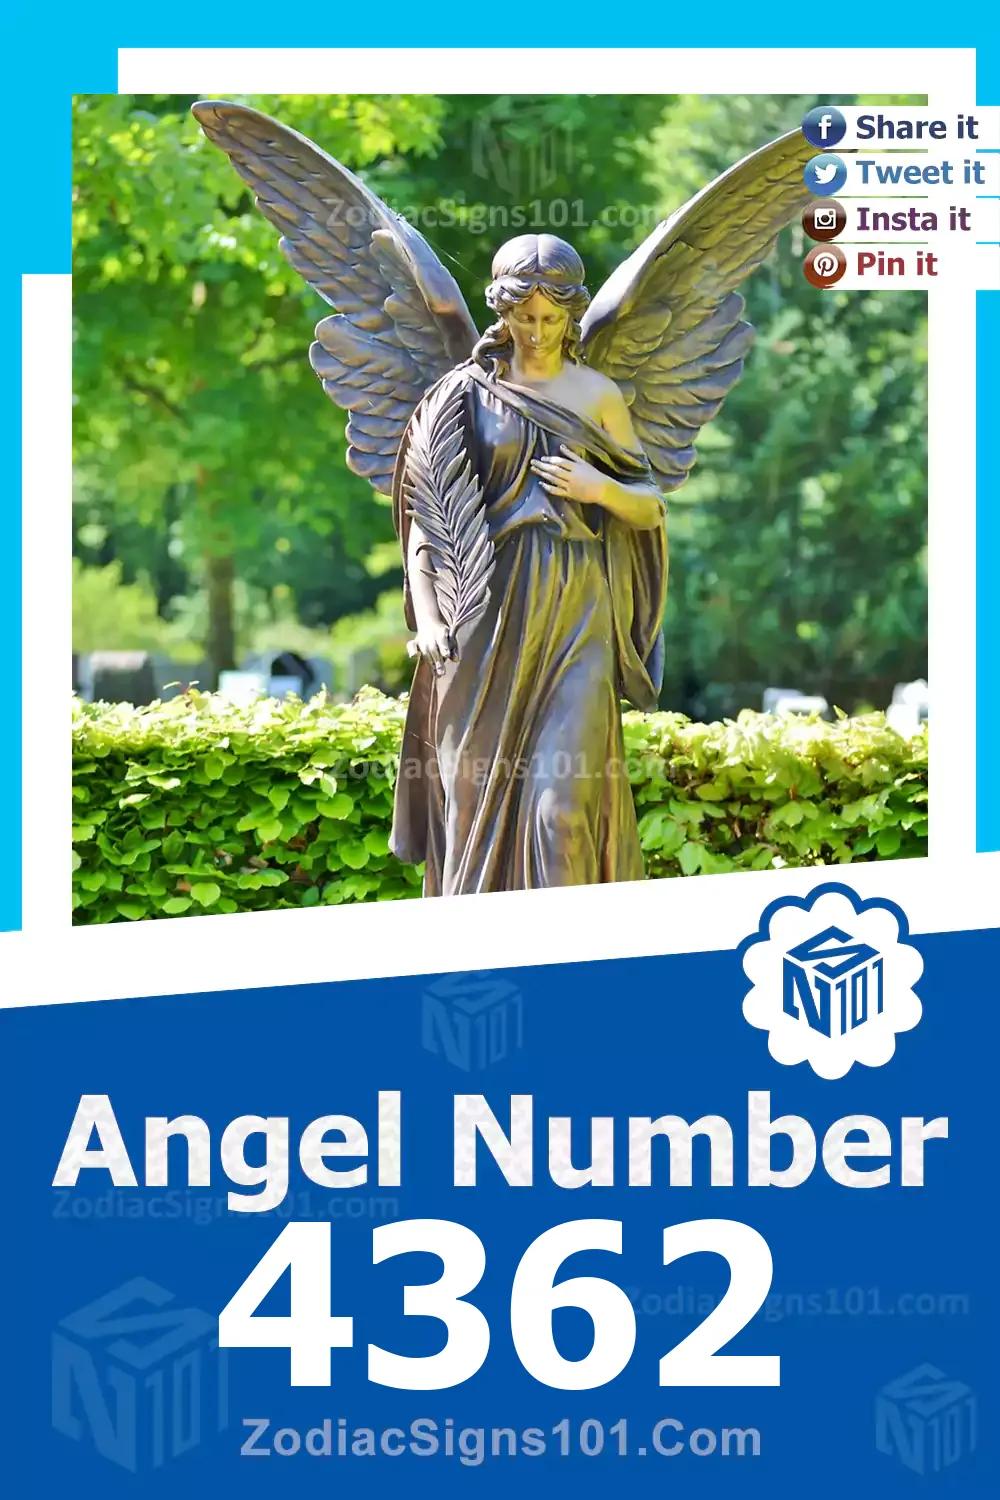 4362-Angel-Number-Meaning.jpg